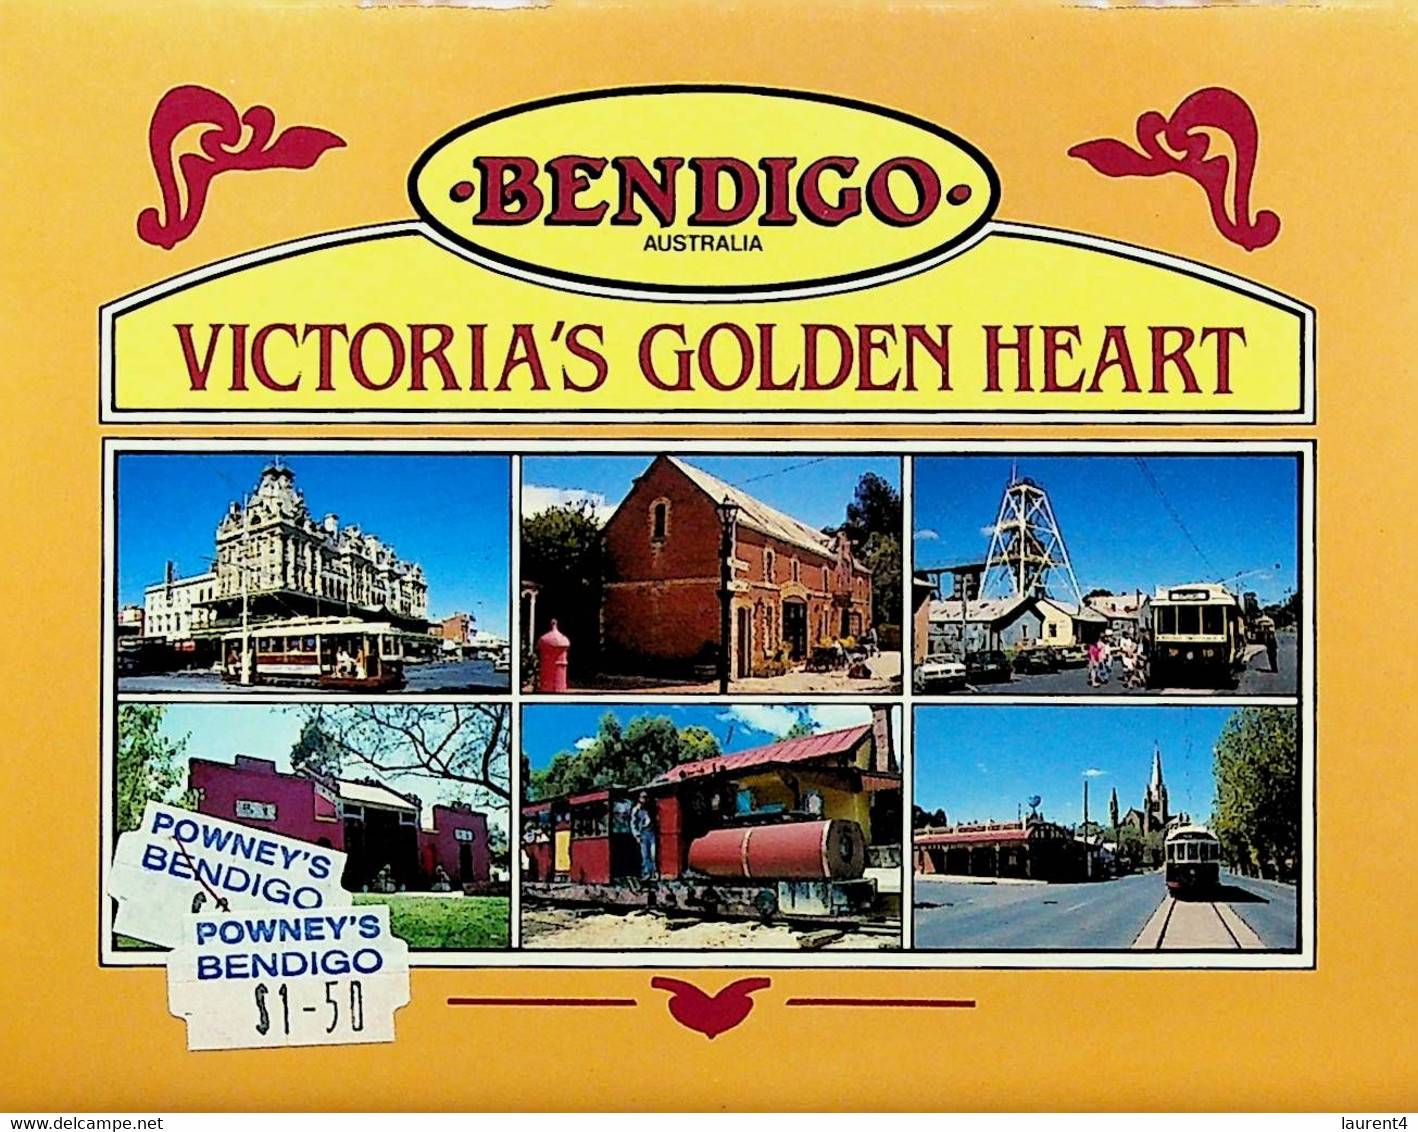 (Booklet 132) Australia - VIC - Bendigo - Bendigo